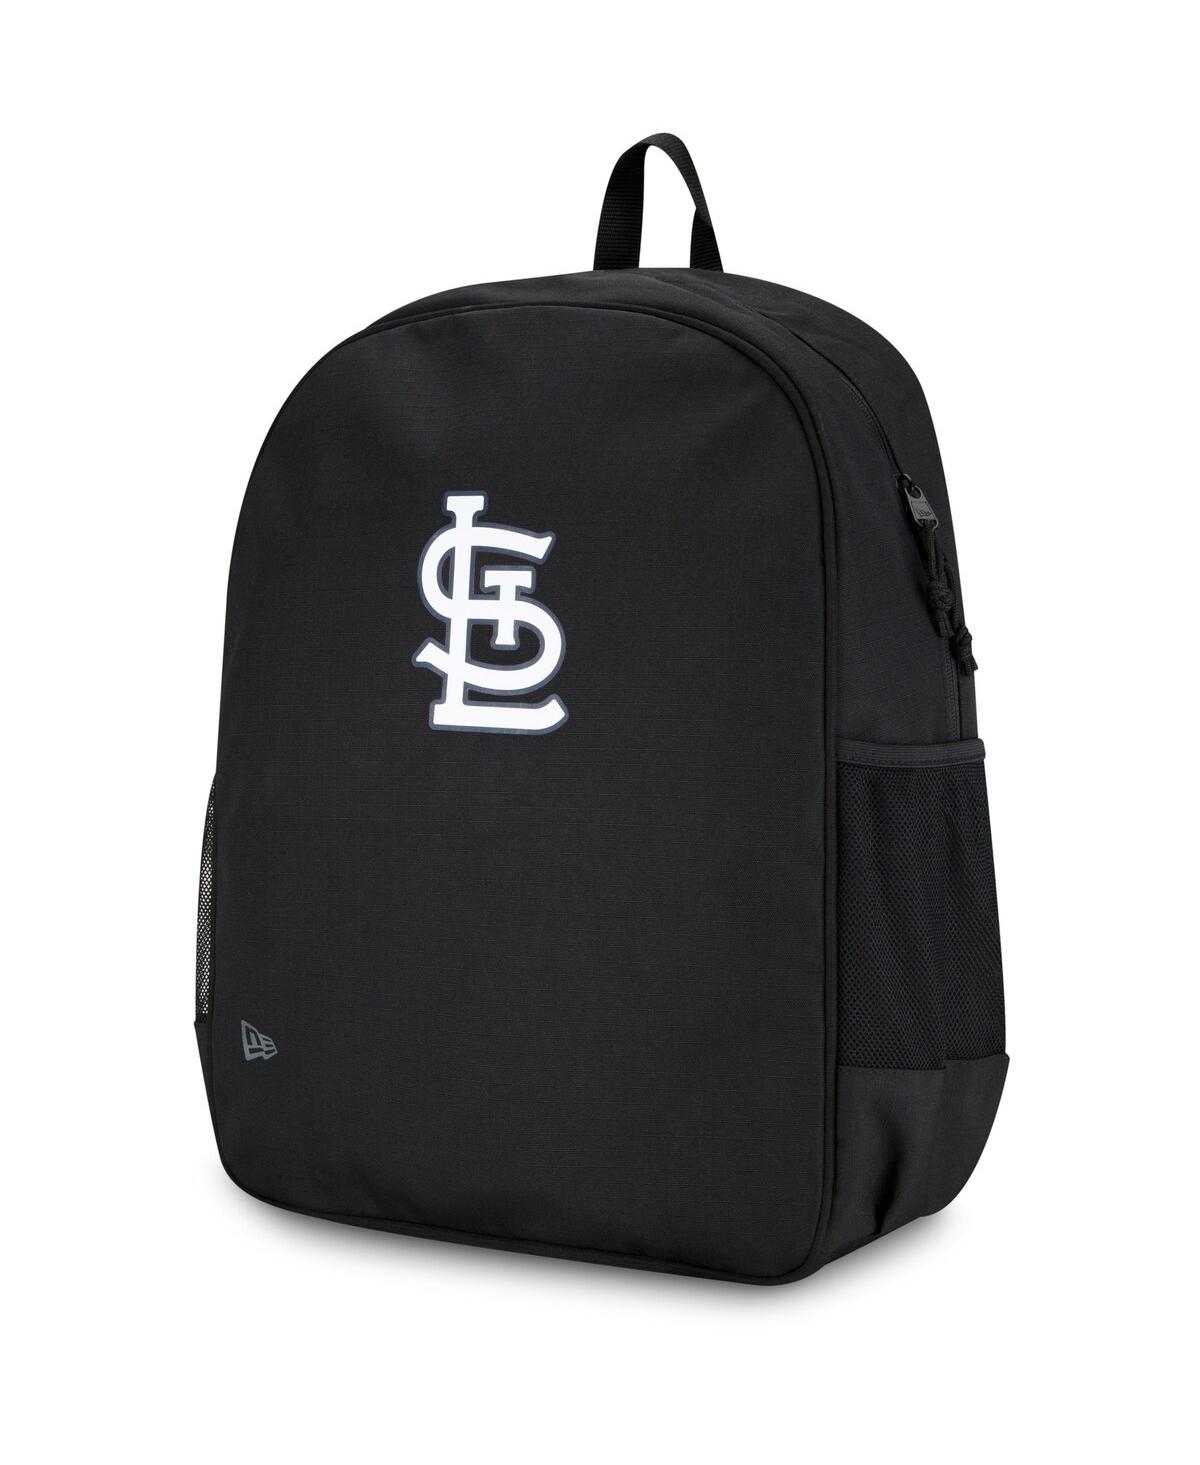 Men's and Women's New Era St. Louis Cardinals Trend Backpack - Black